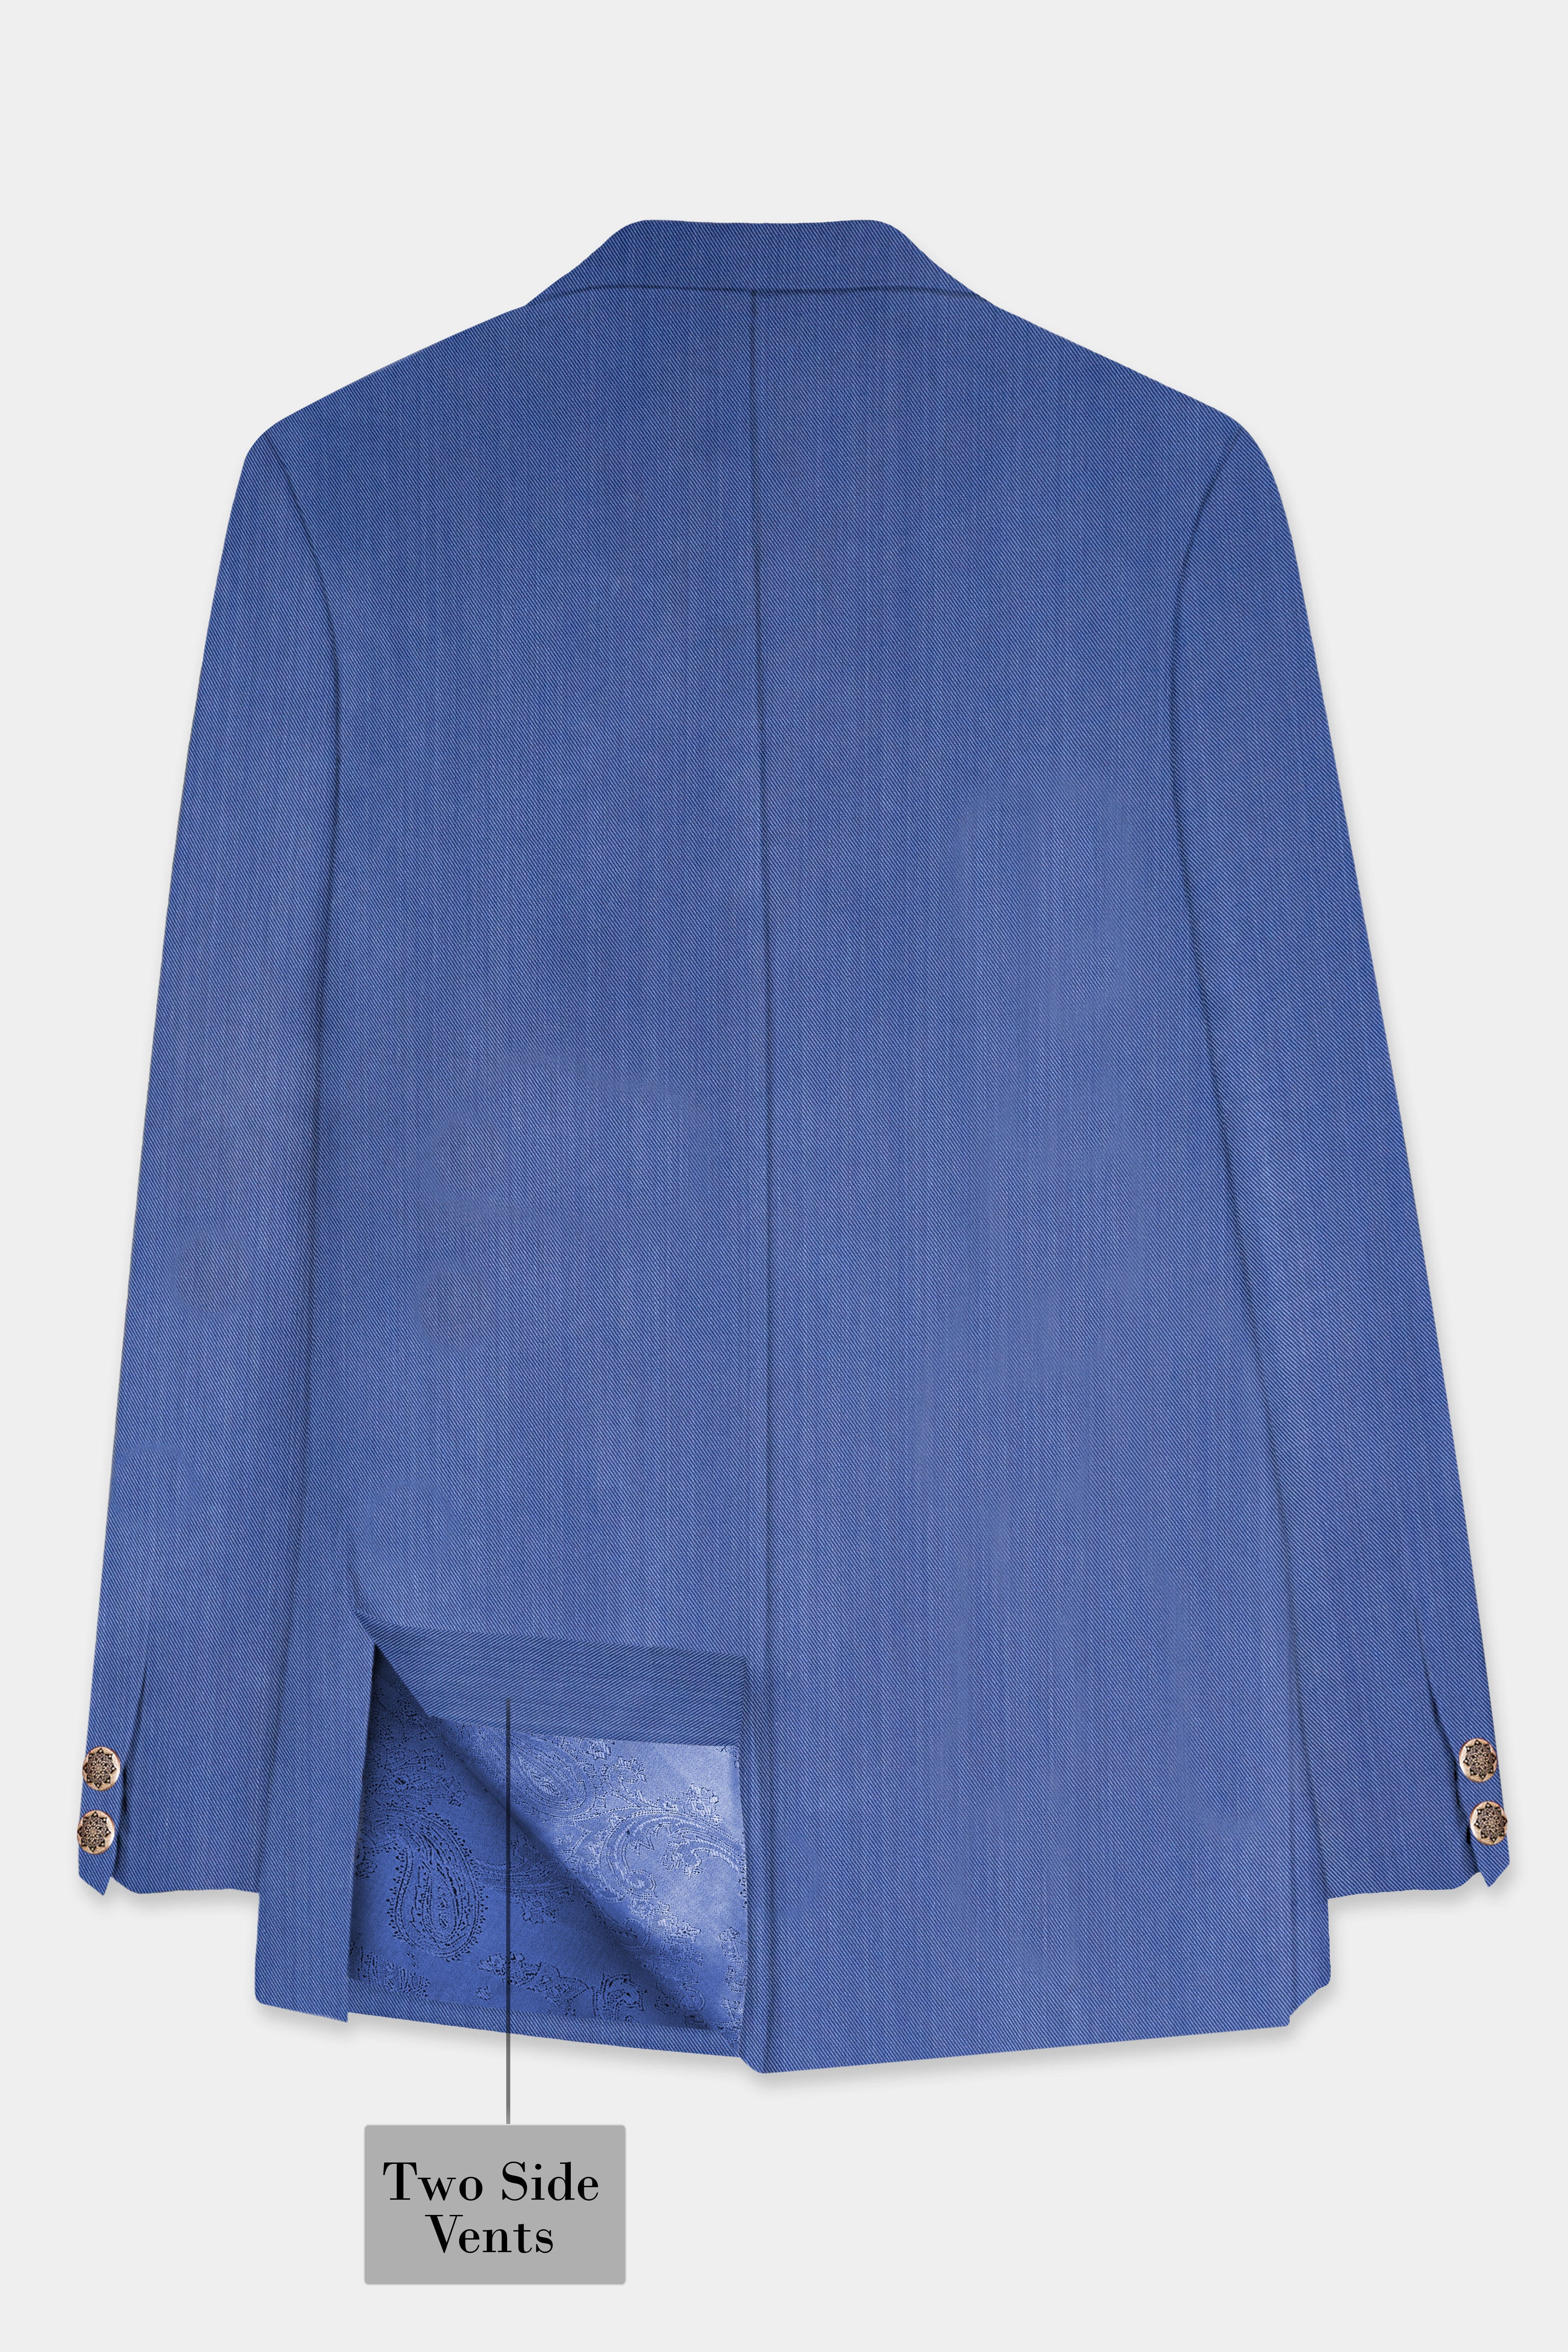 Twilight Blue Premium Cotton Cross Placket Bandhgala Blazer